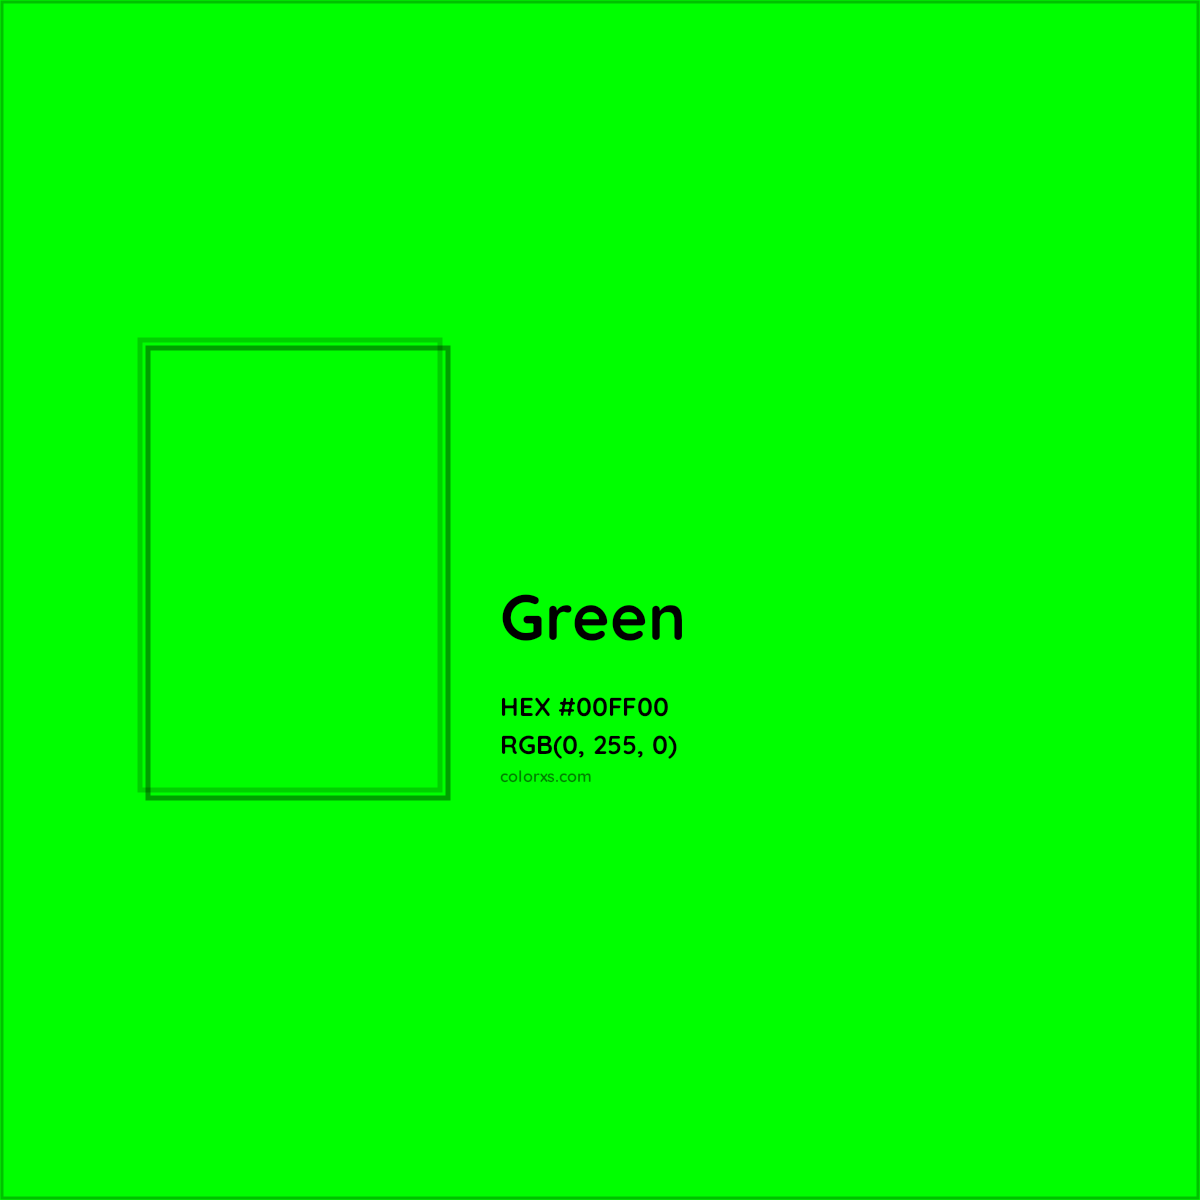 HEX #00FF00 Green - Color Code